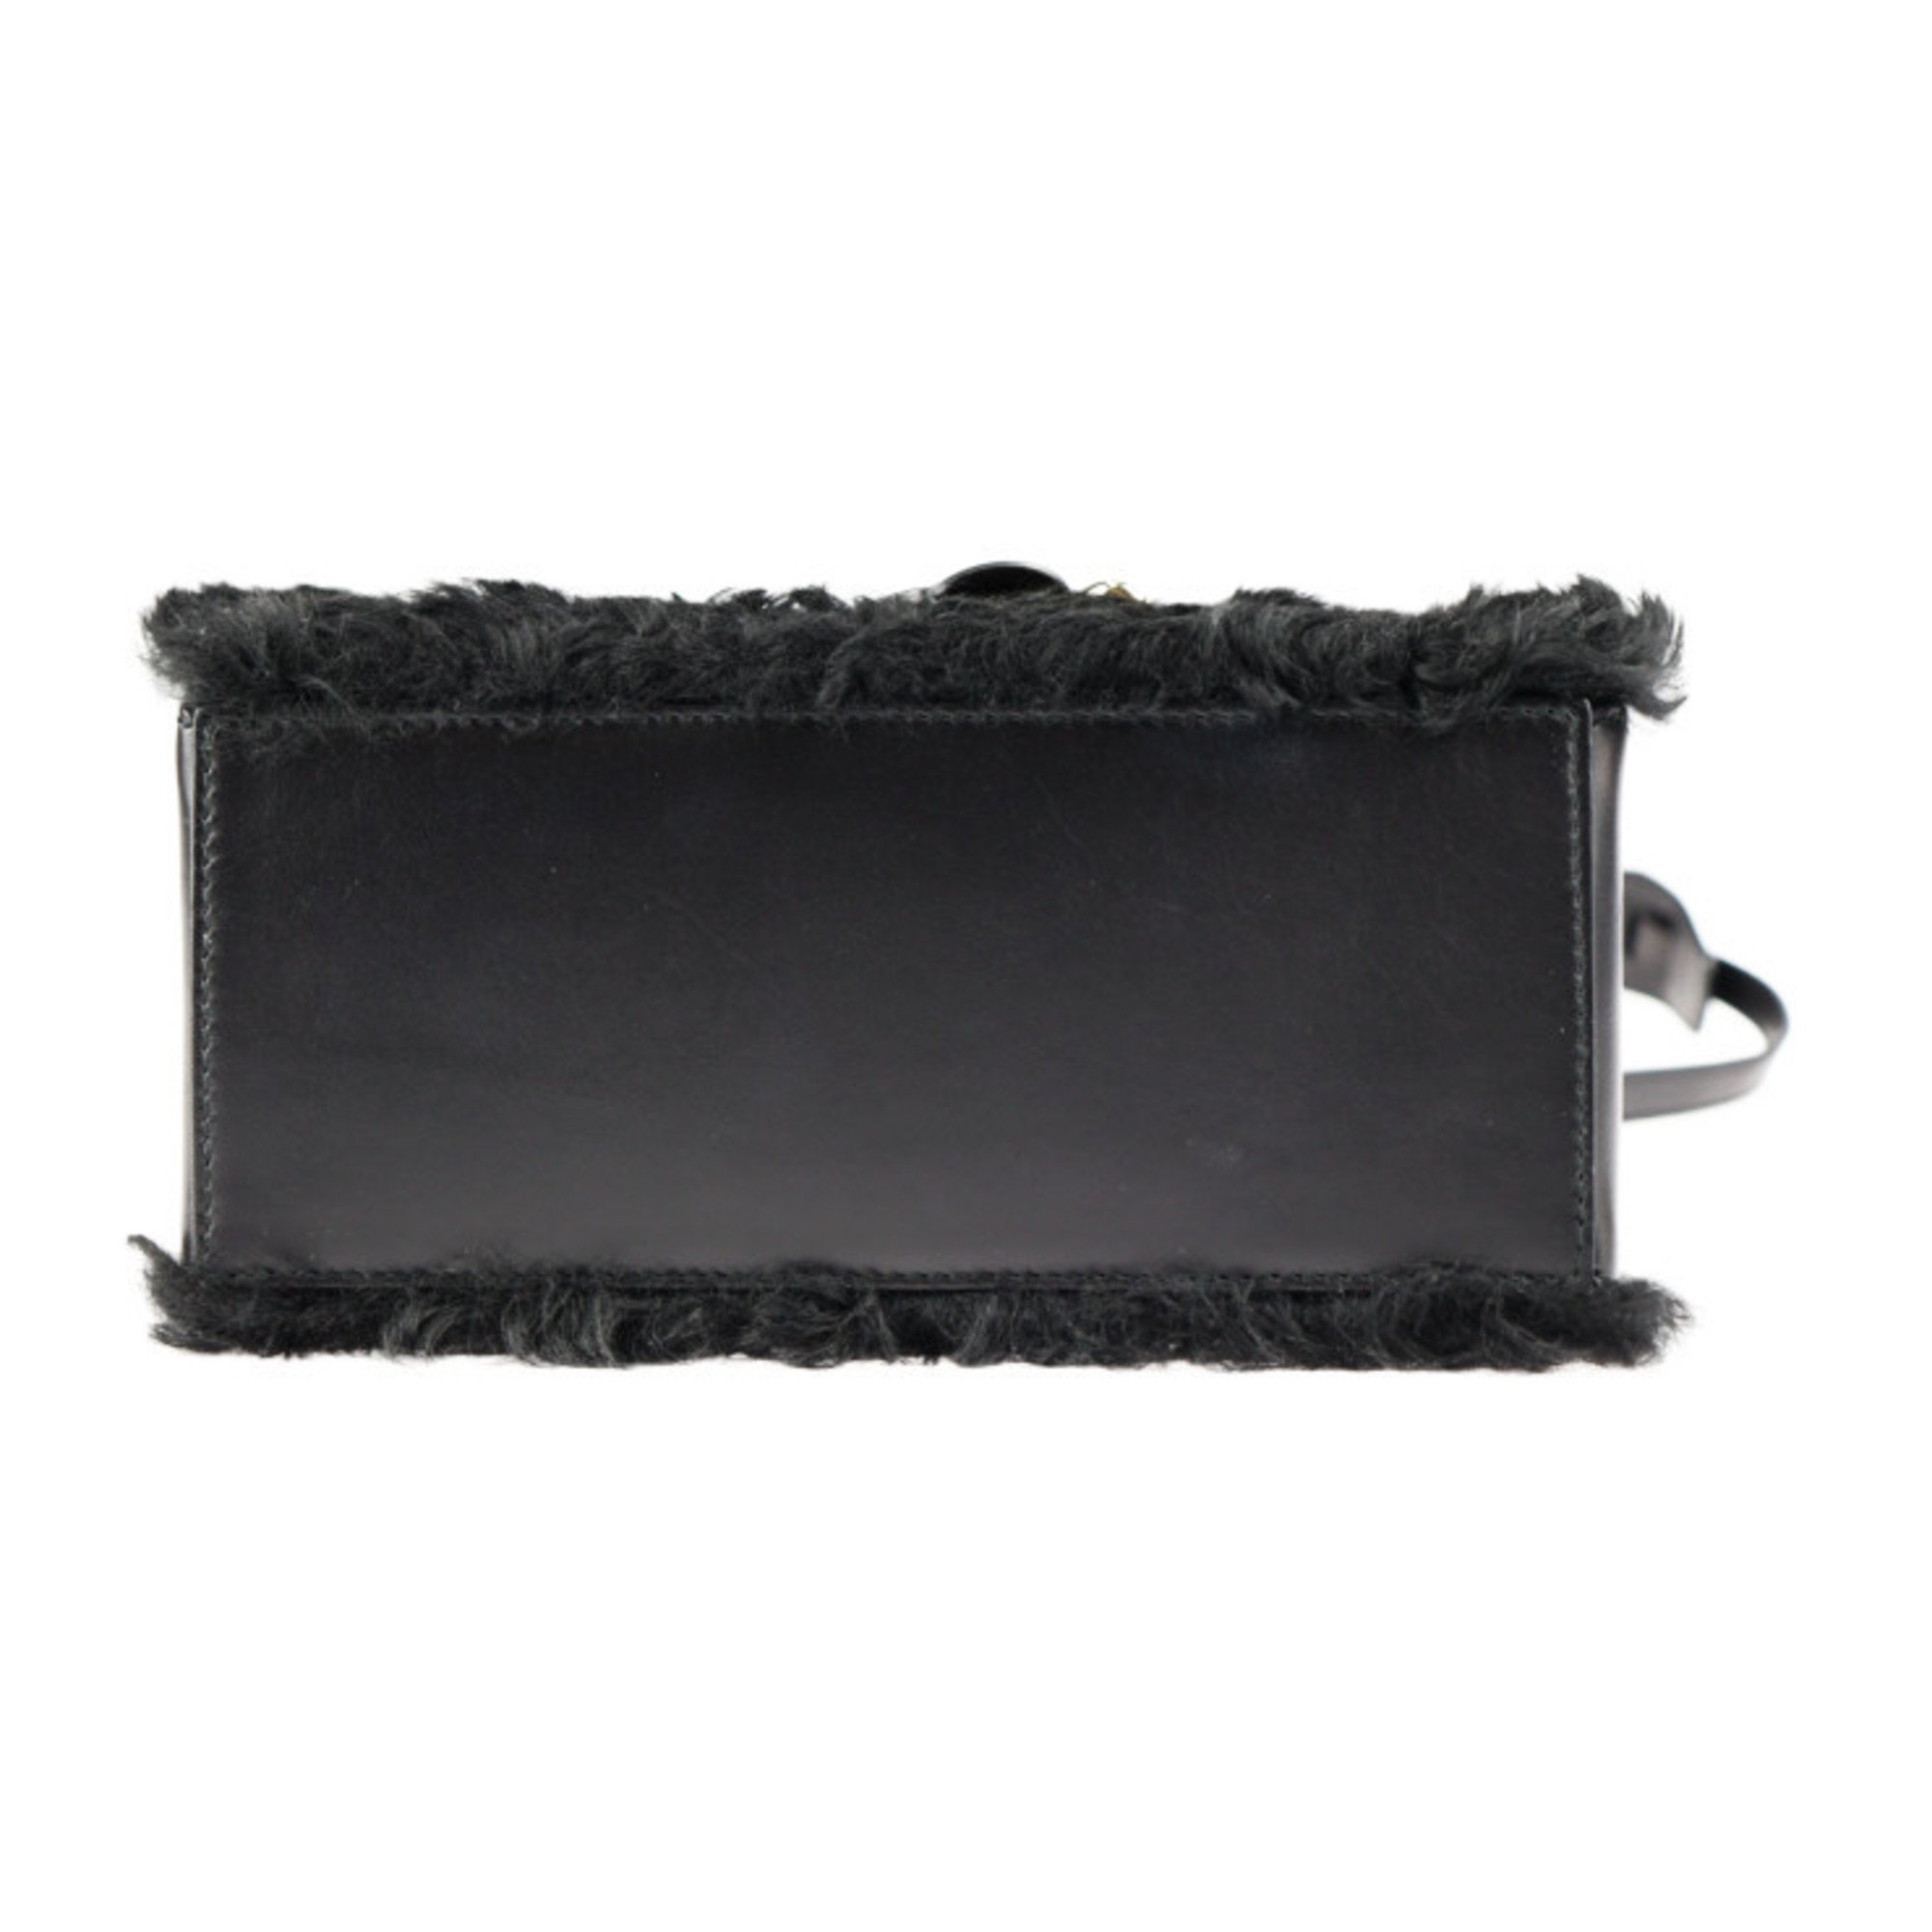 BALENCIAGA Balenciaga Padlock Nude Mini Handbag 347237 BP91J 1000 Mouton Leather Black Gold Hardware 2WAY Shoulder Bag